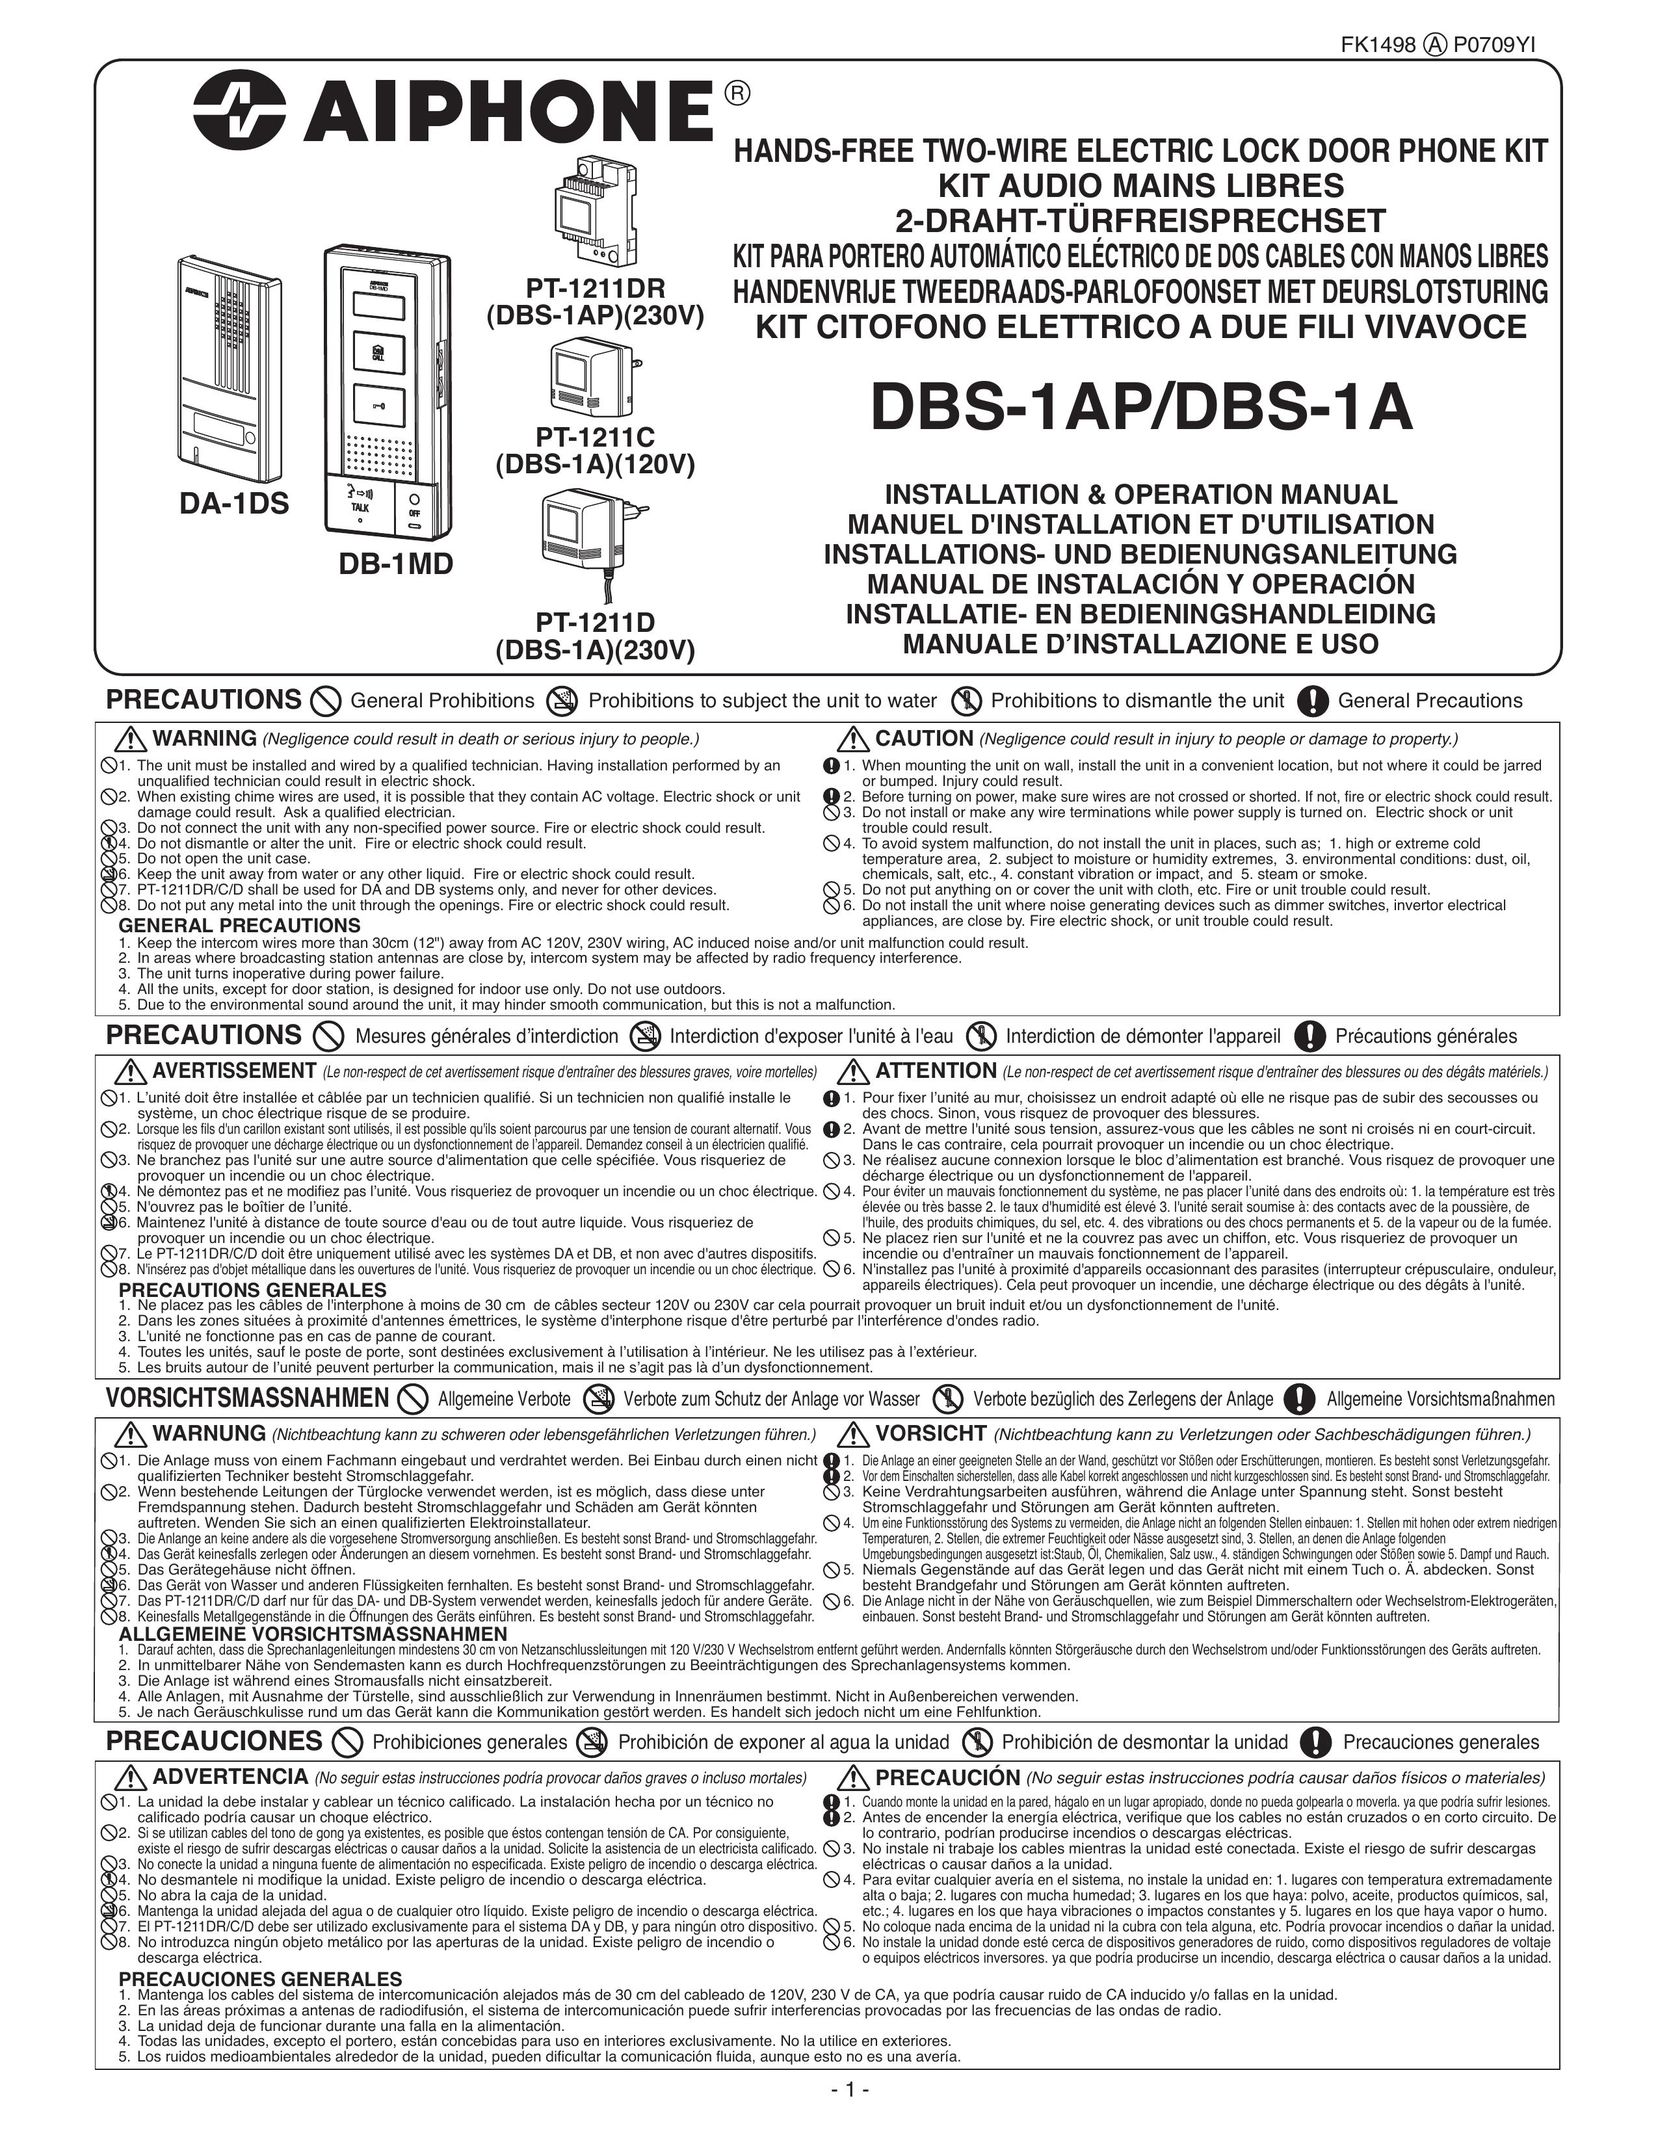 Aiphone DB-1MD Door User Manual